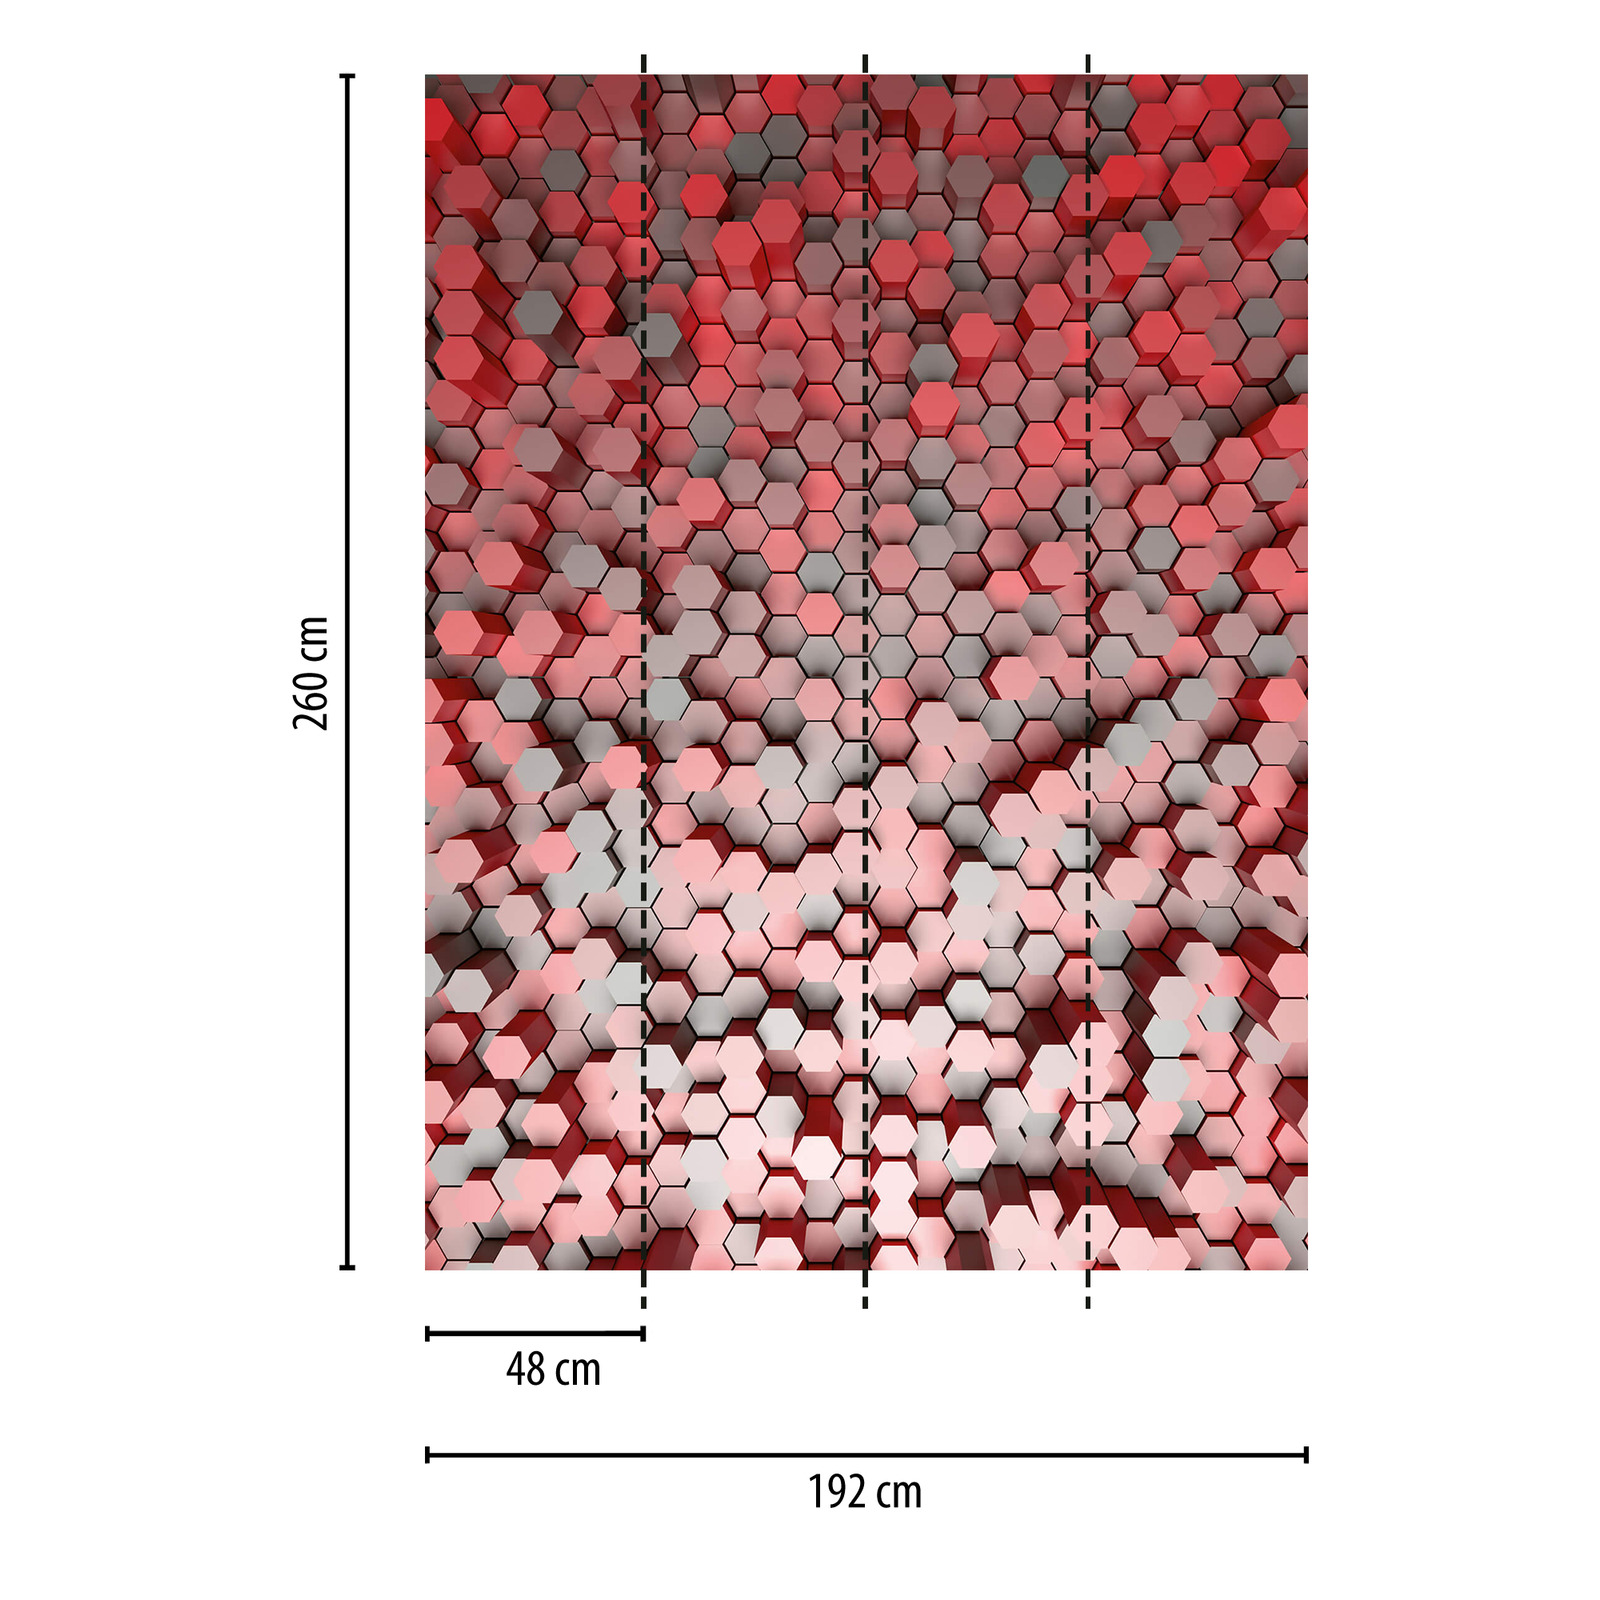             3D Photo wallpaper Hexagon graphic design - red, grey
        